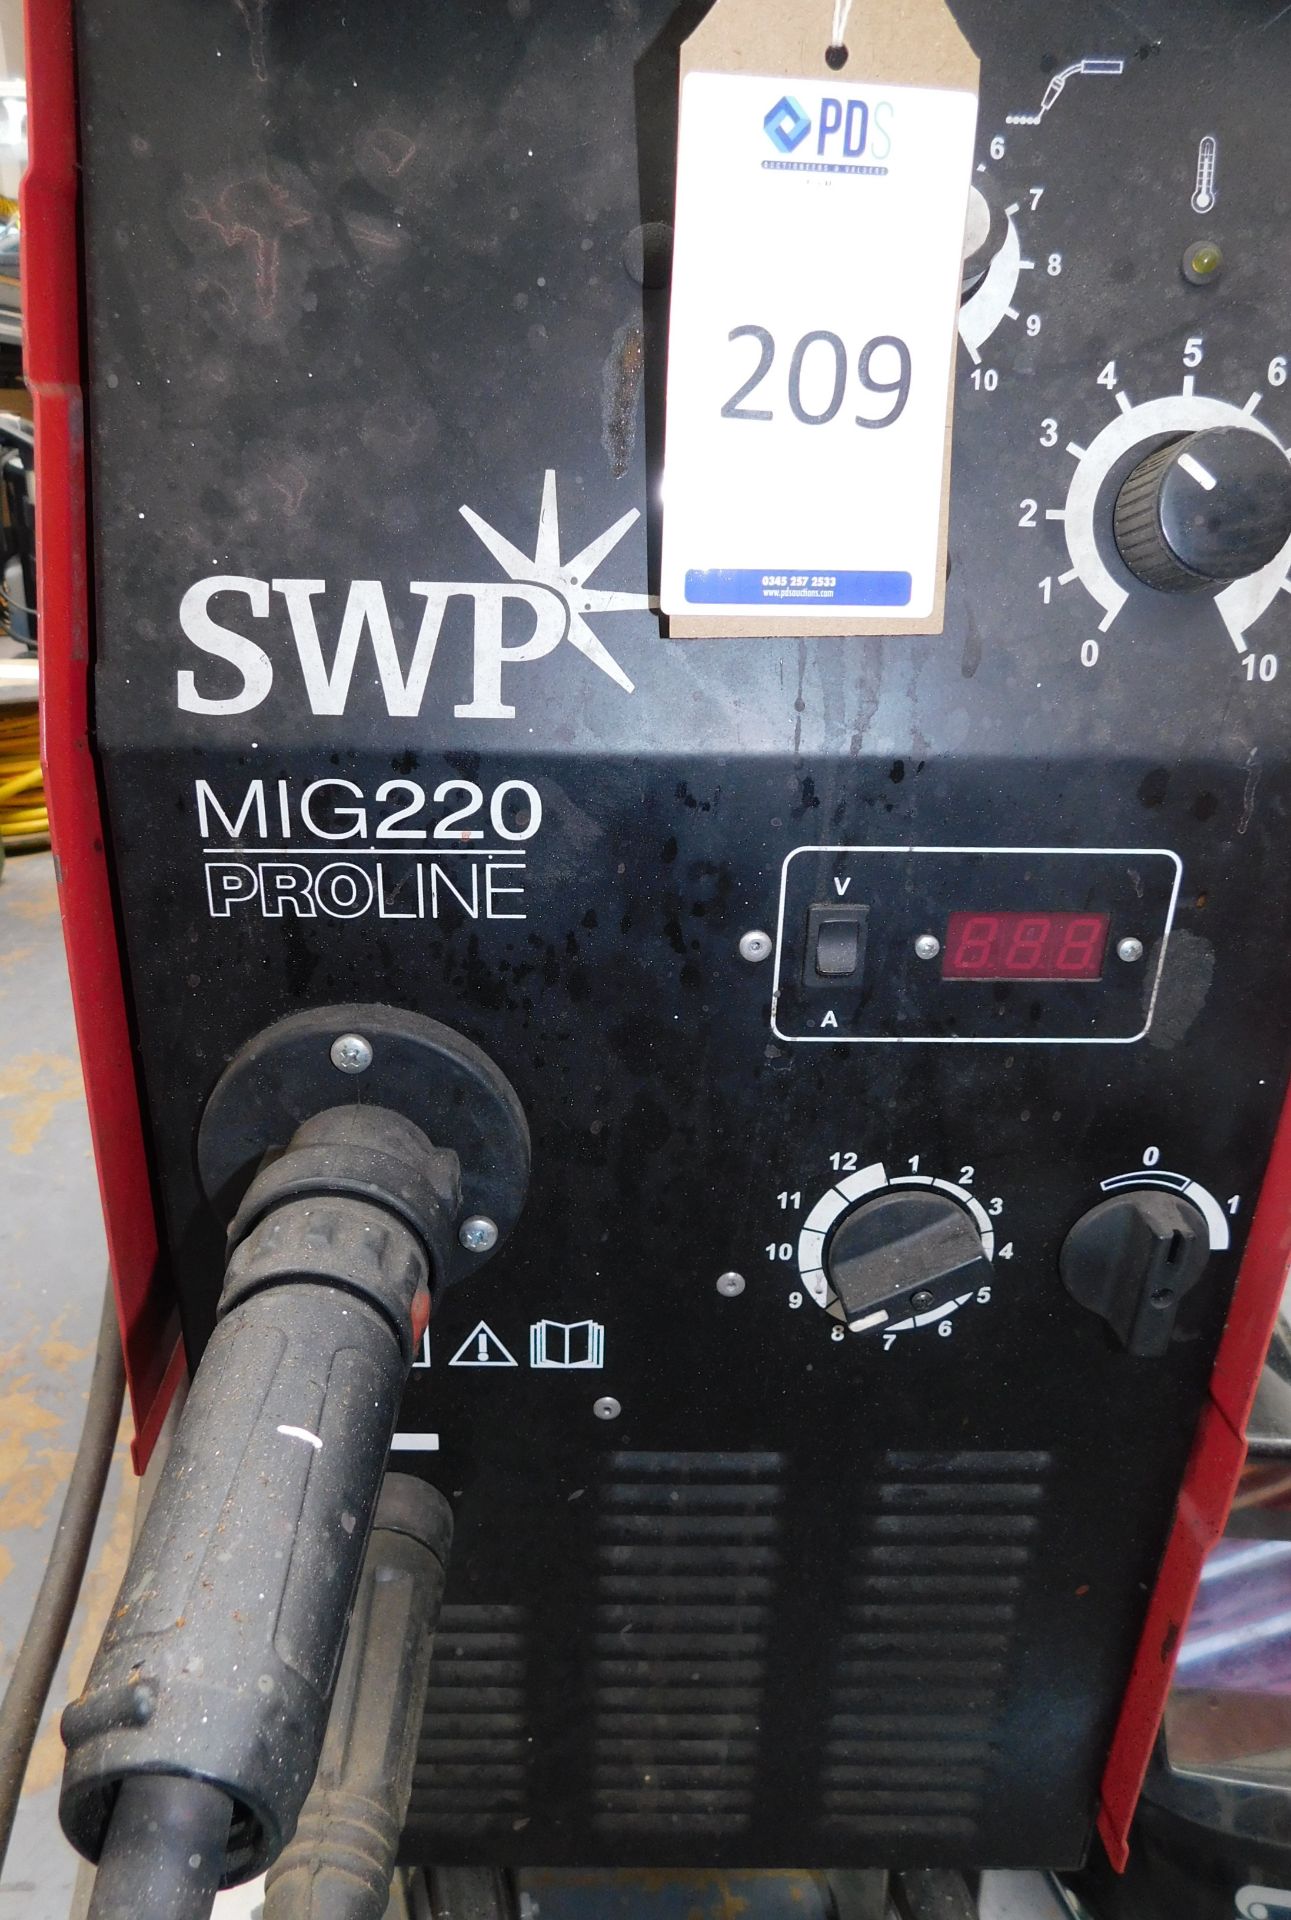 SWP MIg220 Proline Welder (Location: Kettering - See General Notes for More Details) - Image 2 of 3